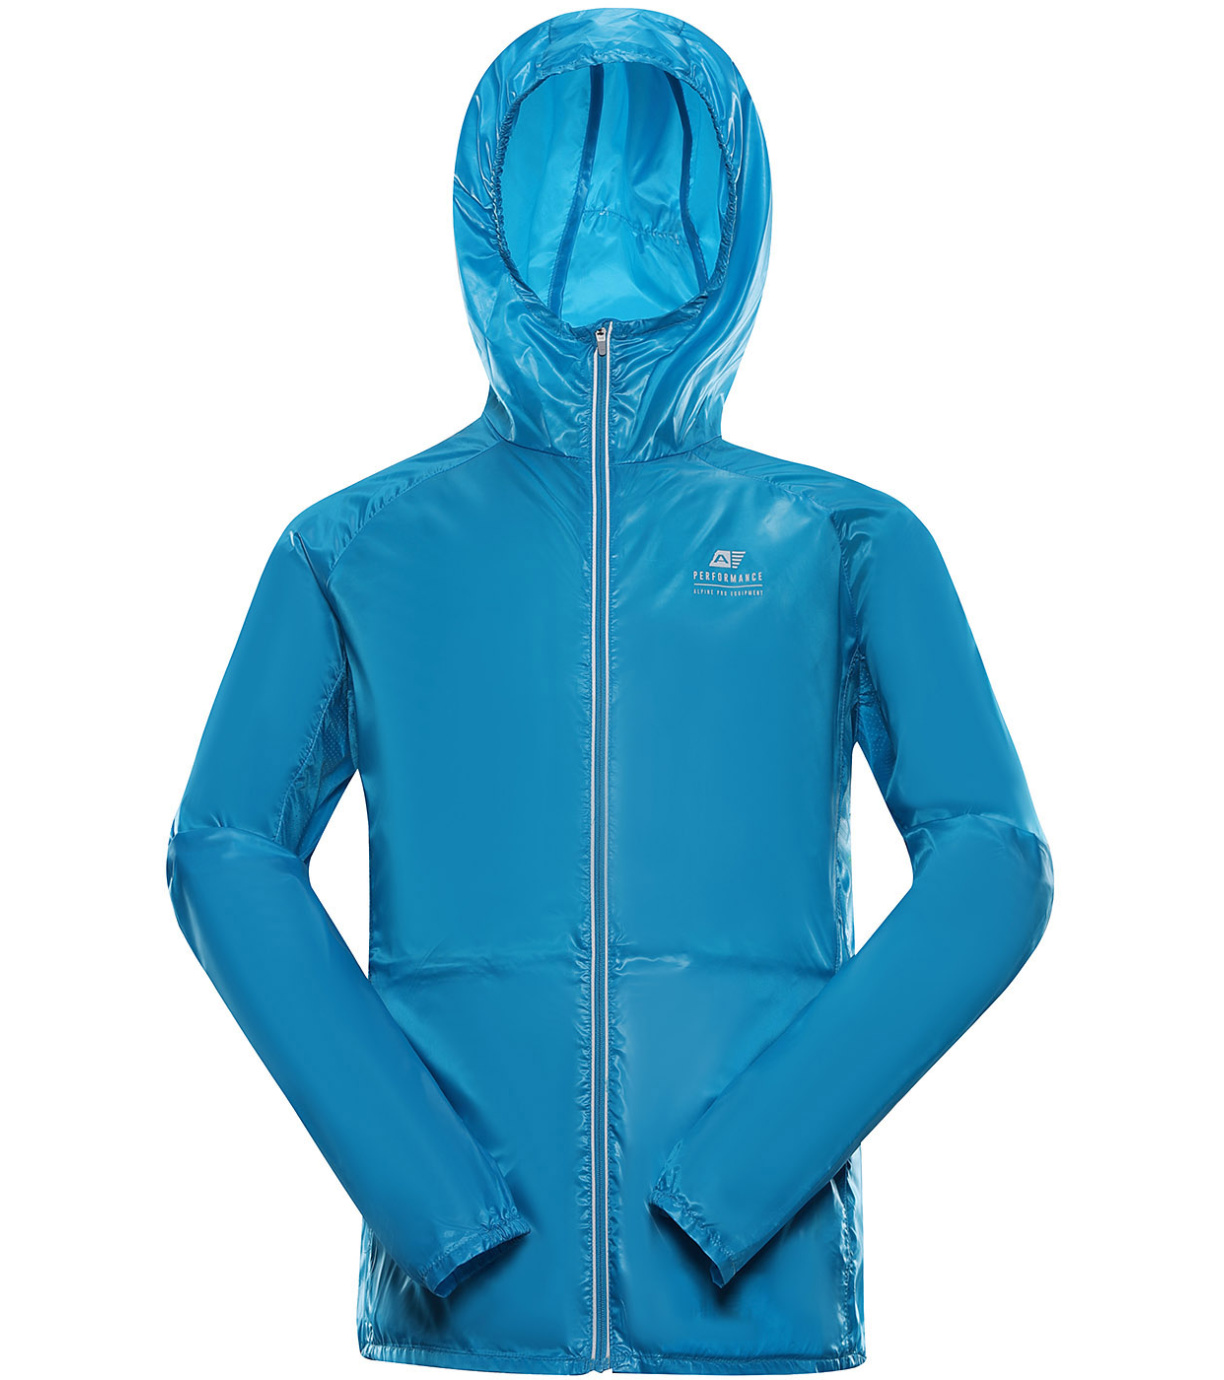 Pánska športová bunda BIK ALPINE PRO neon atomic blue